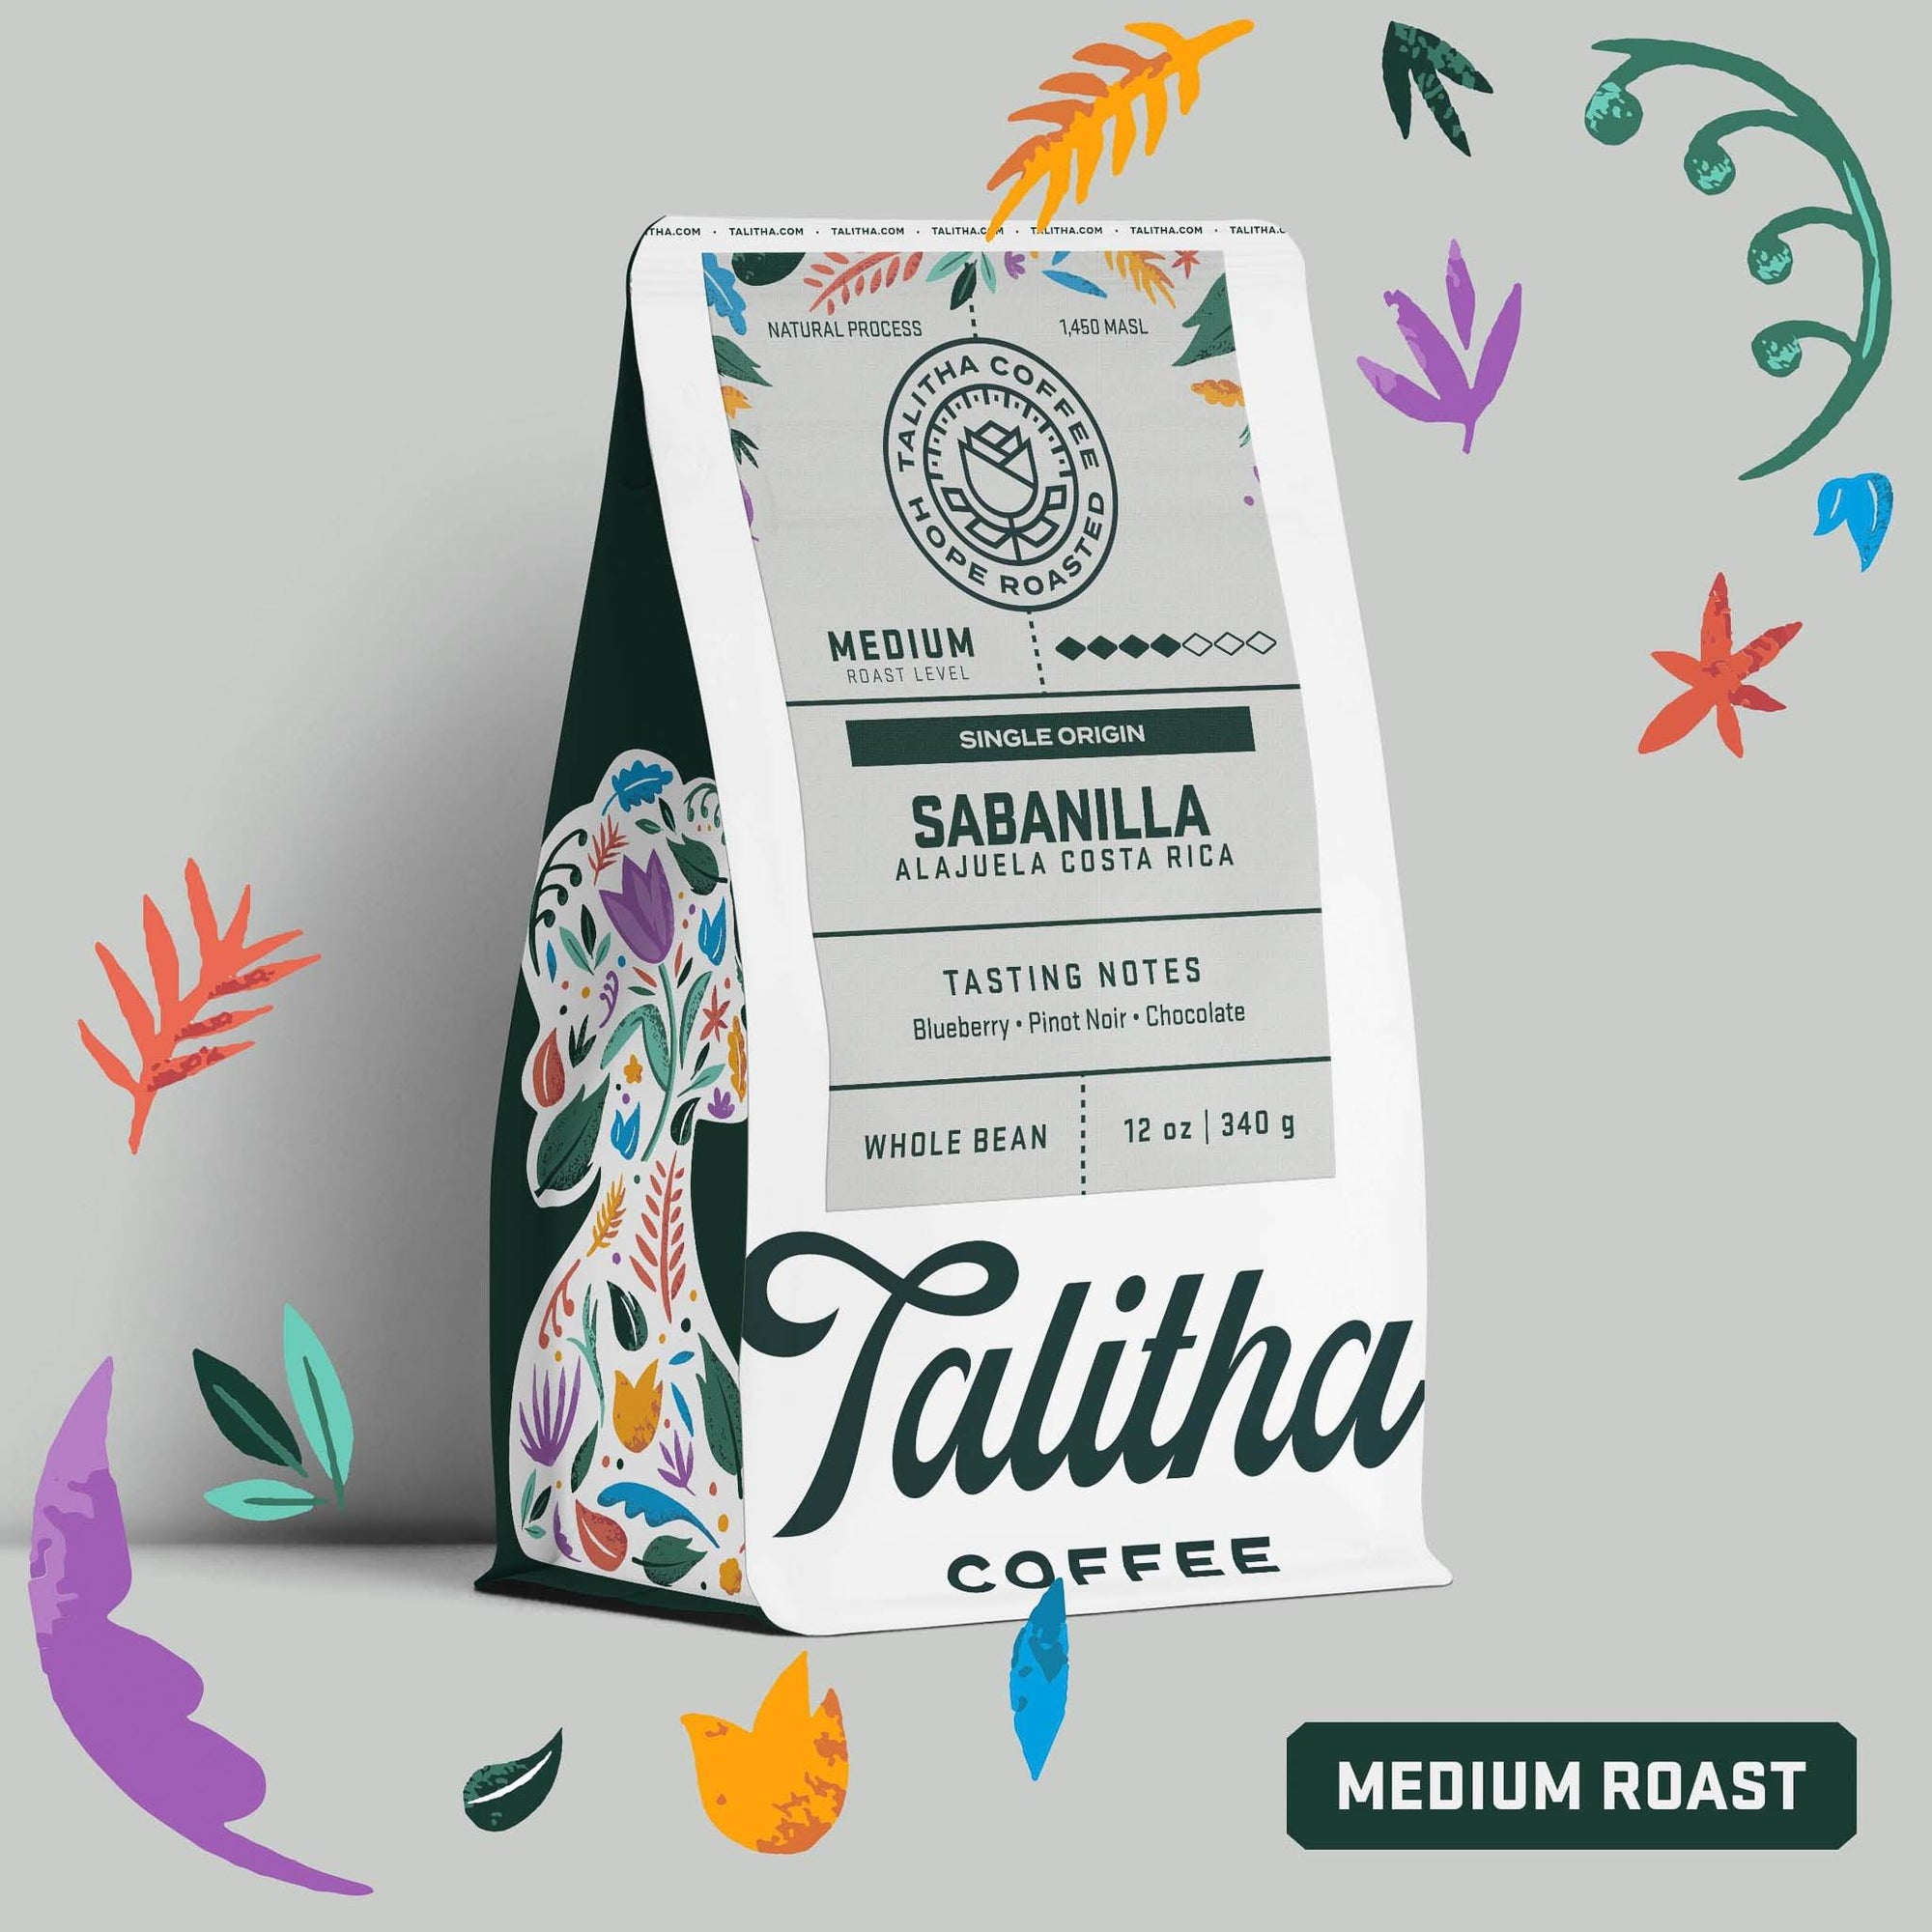 Sabanilla - Costa Rica - Talitha Coffee